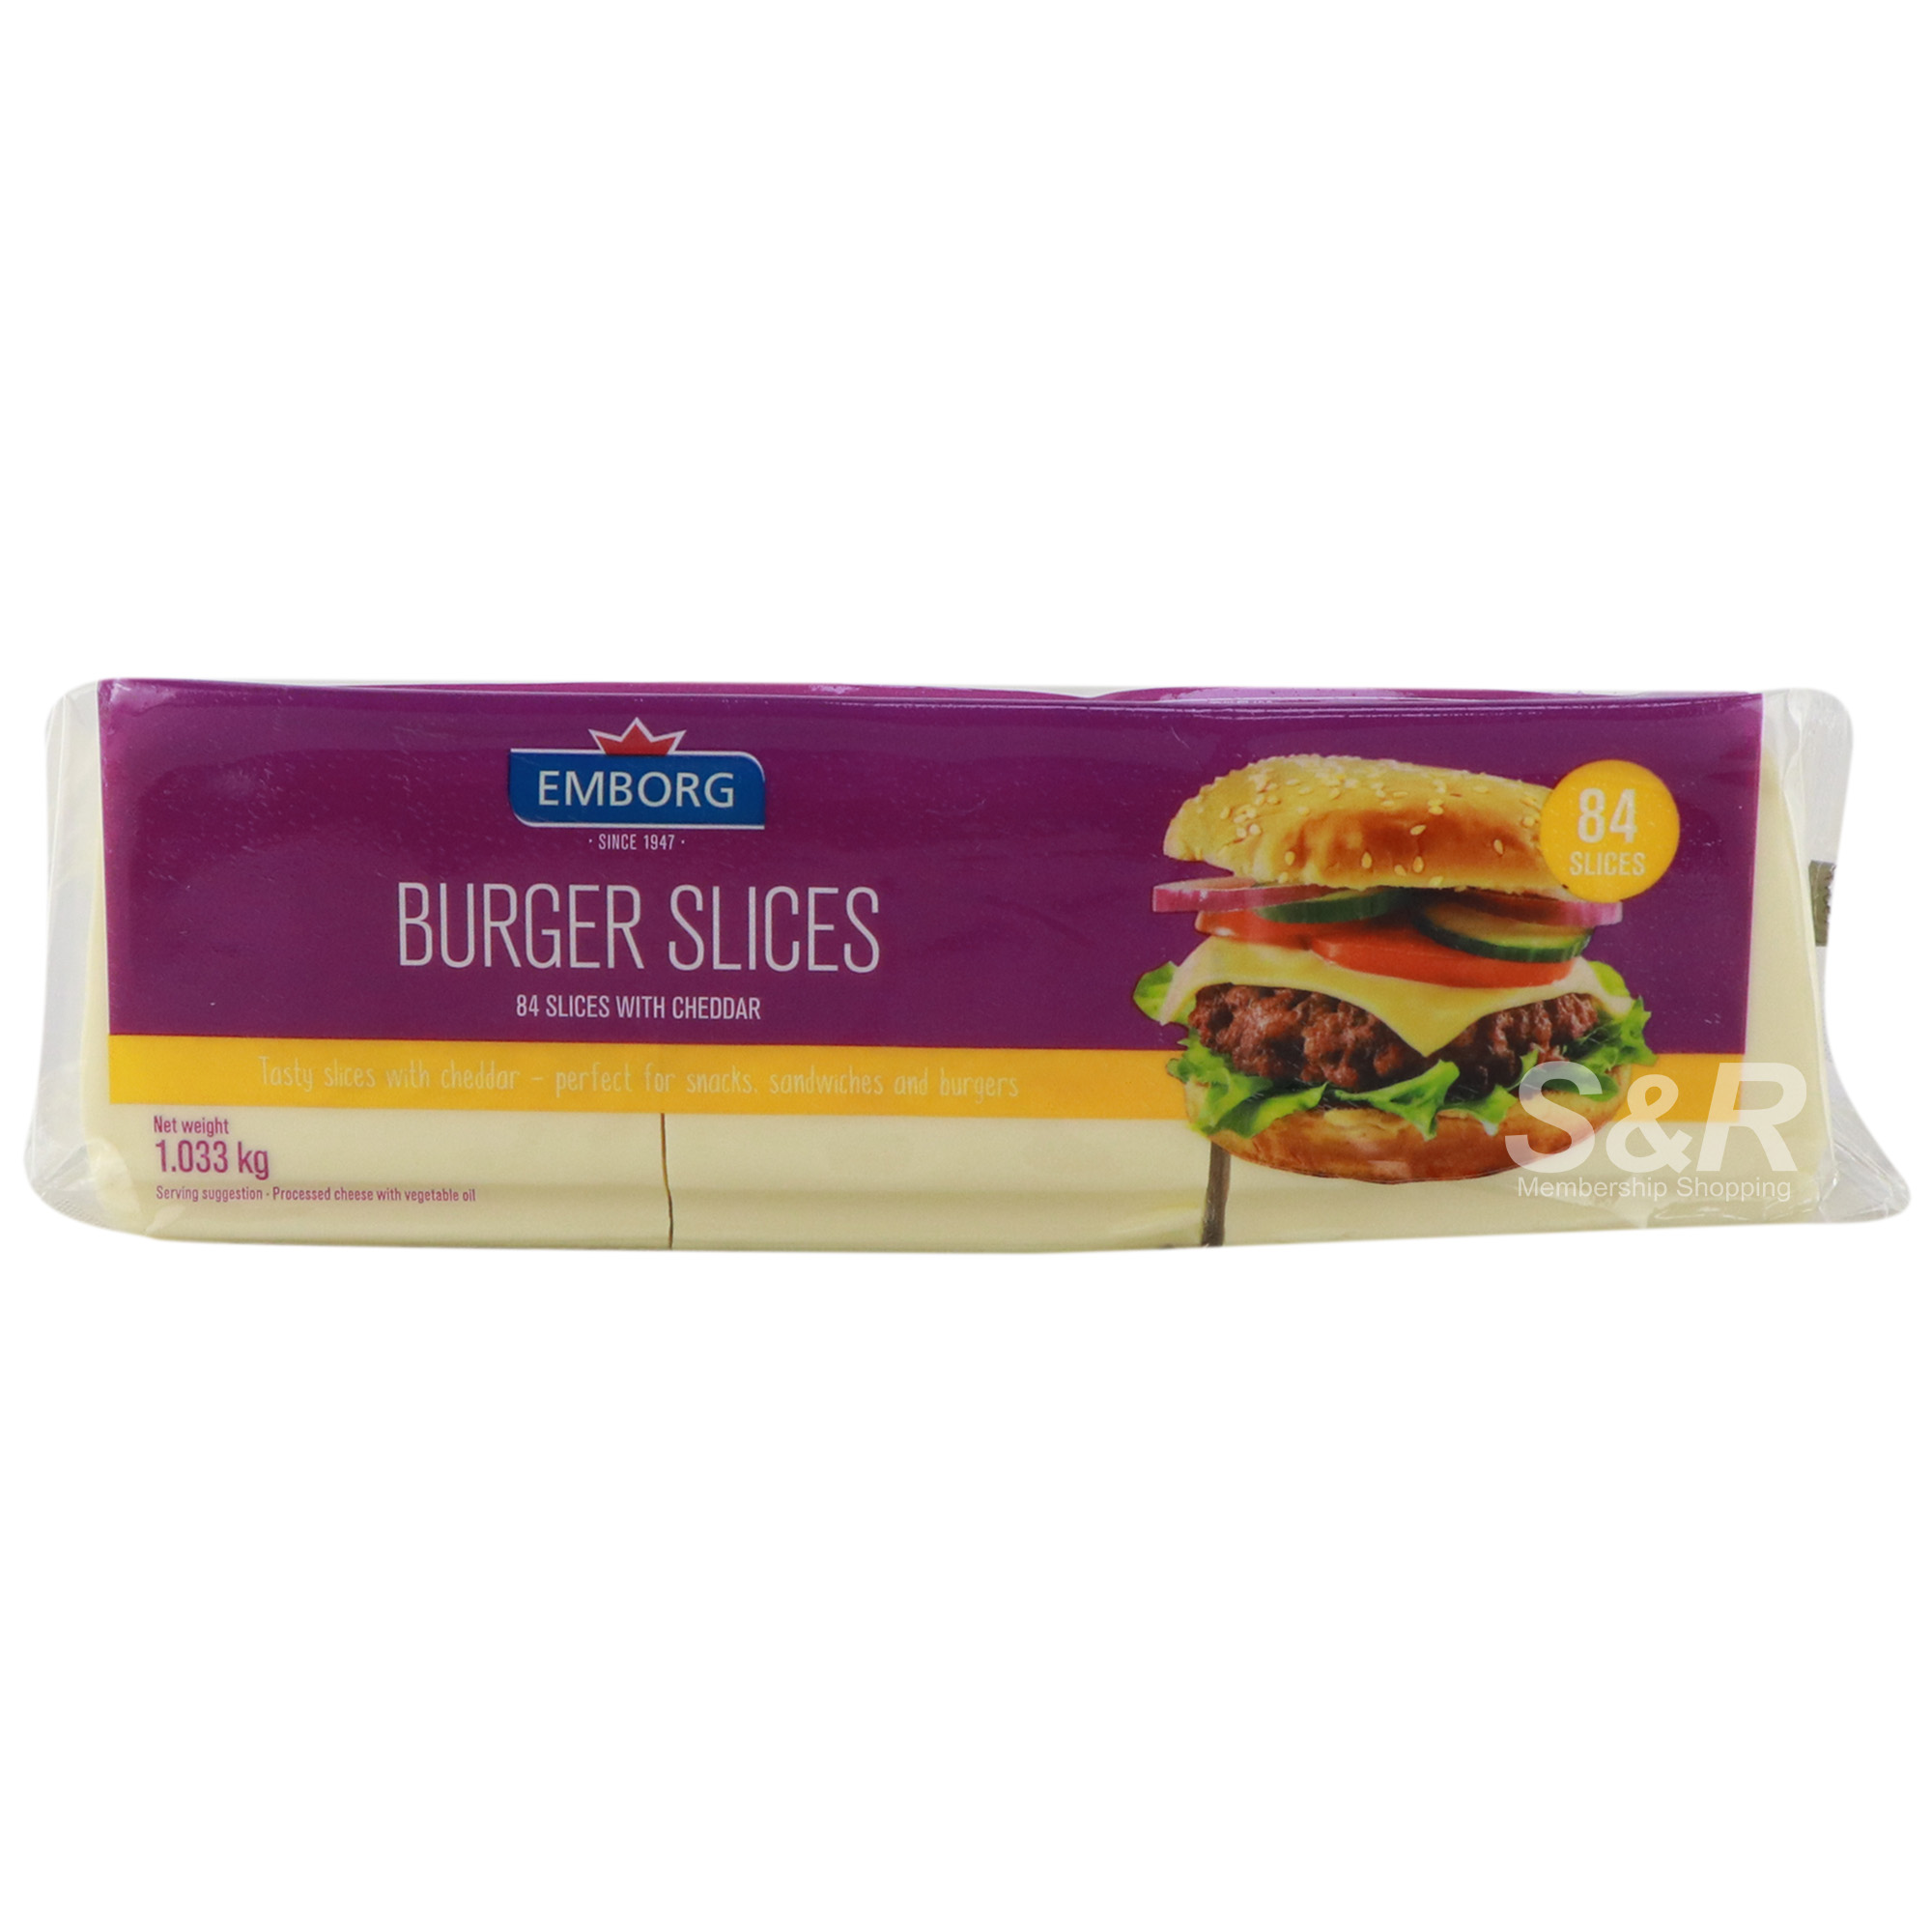 Emborg Burger Slices White Cheddar 84 slices